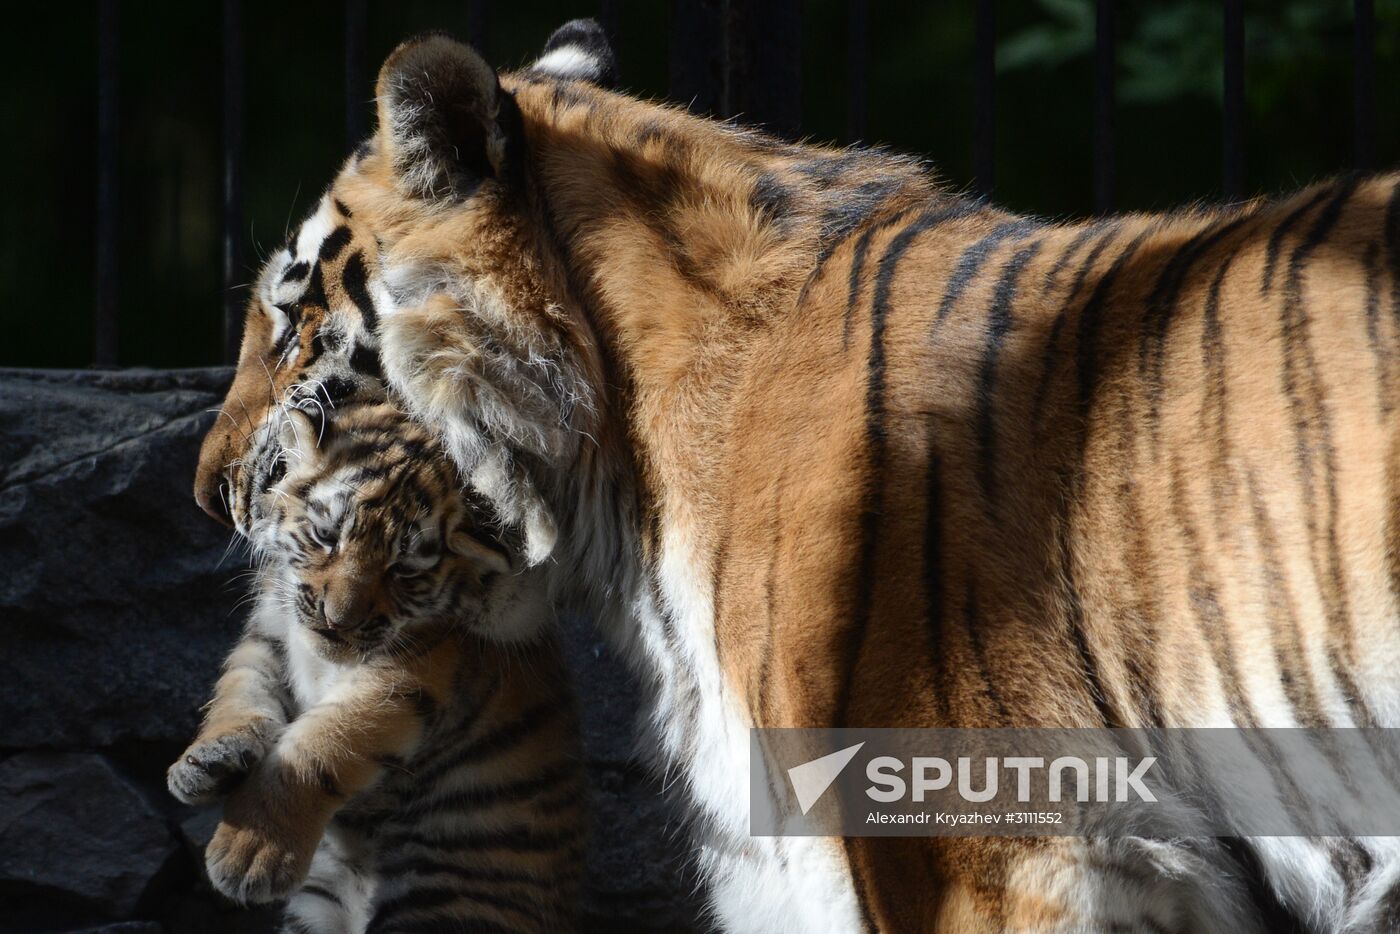 Tiger cubs born at Novosibirsk Zoo